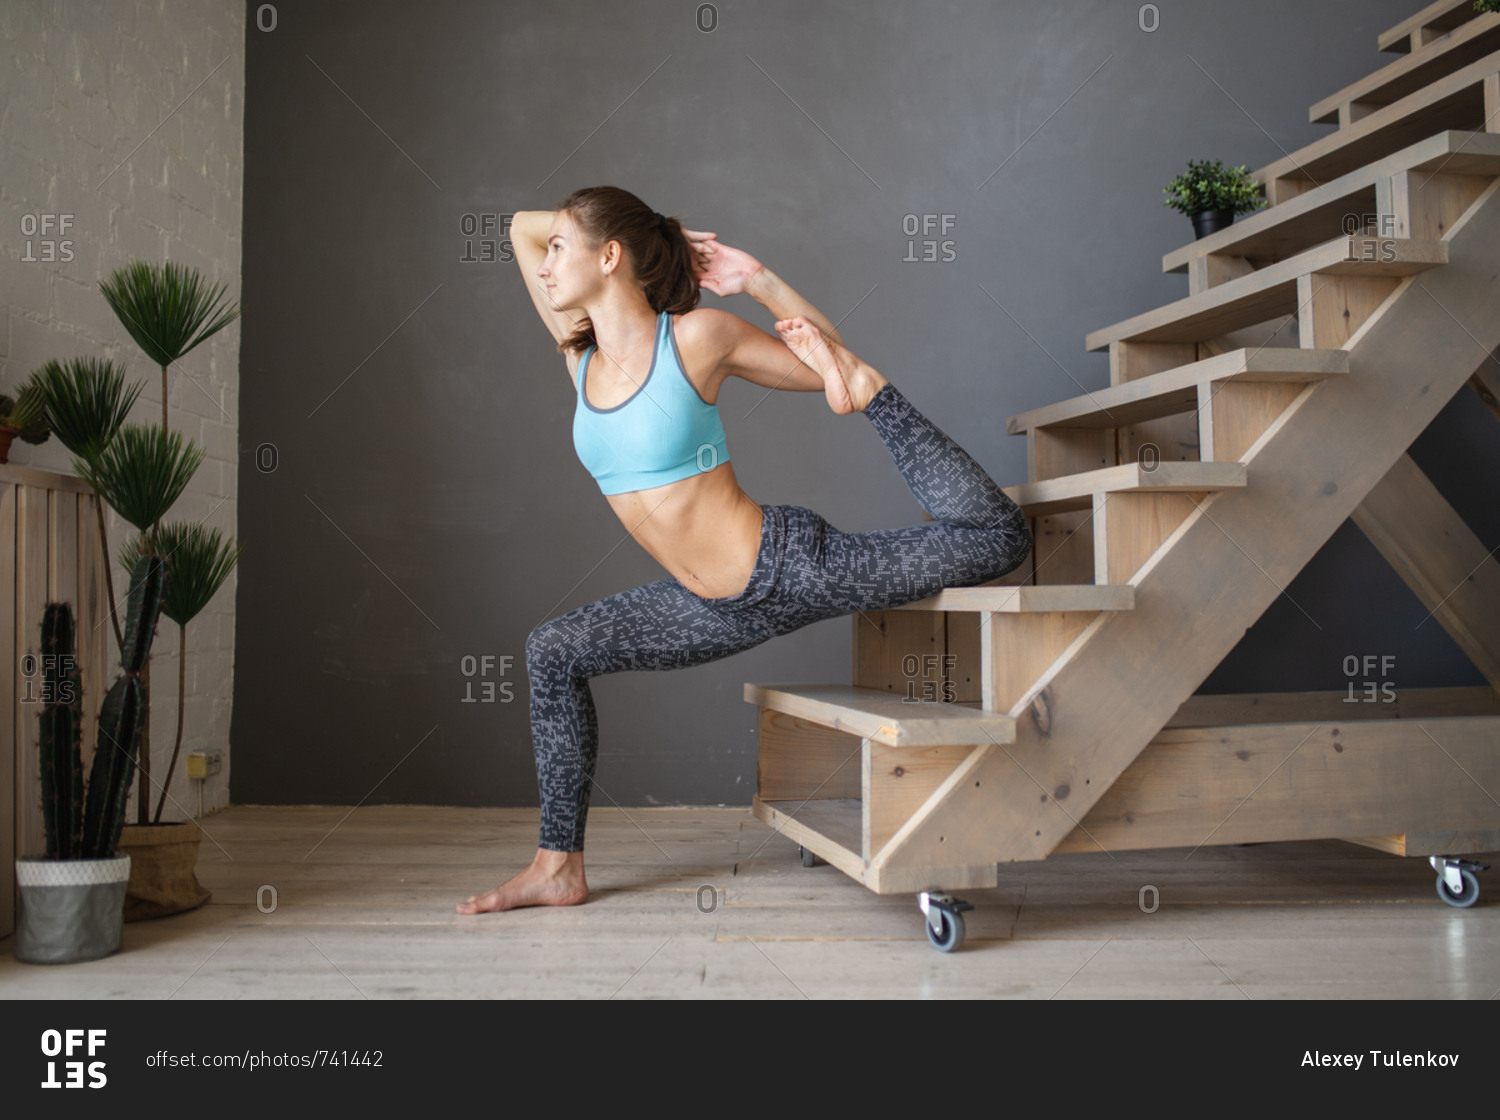 Helpful Strategies For advanced yoga poses step by step | Yoga poses  advanced, Cool yoga poses, Advanced yoga